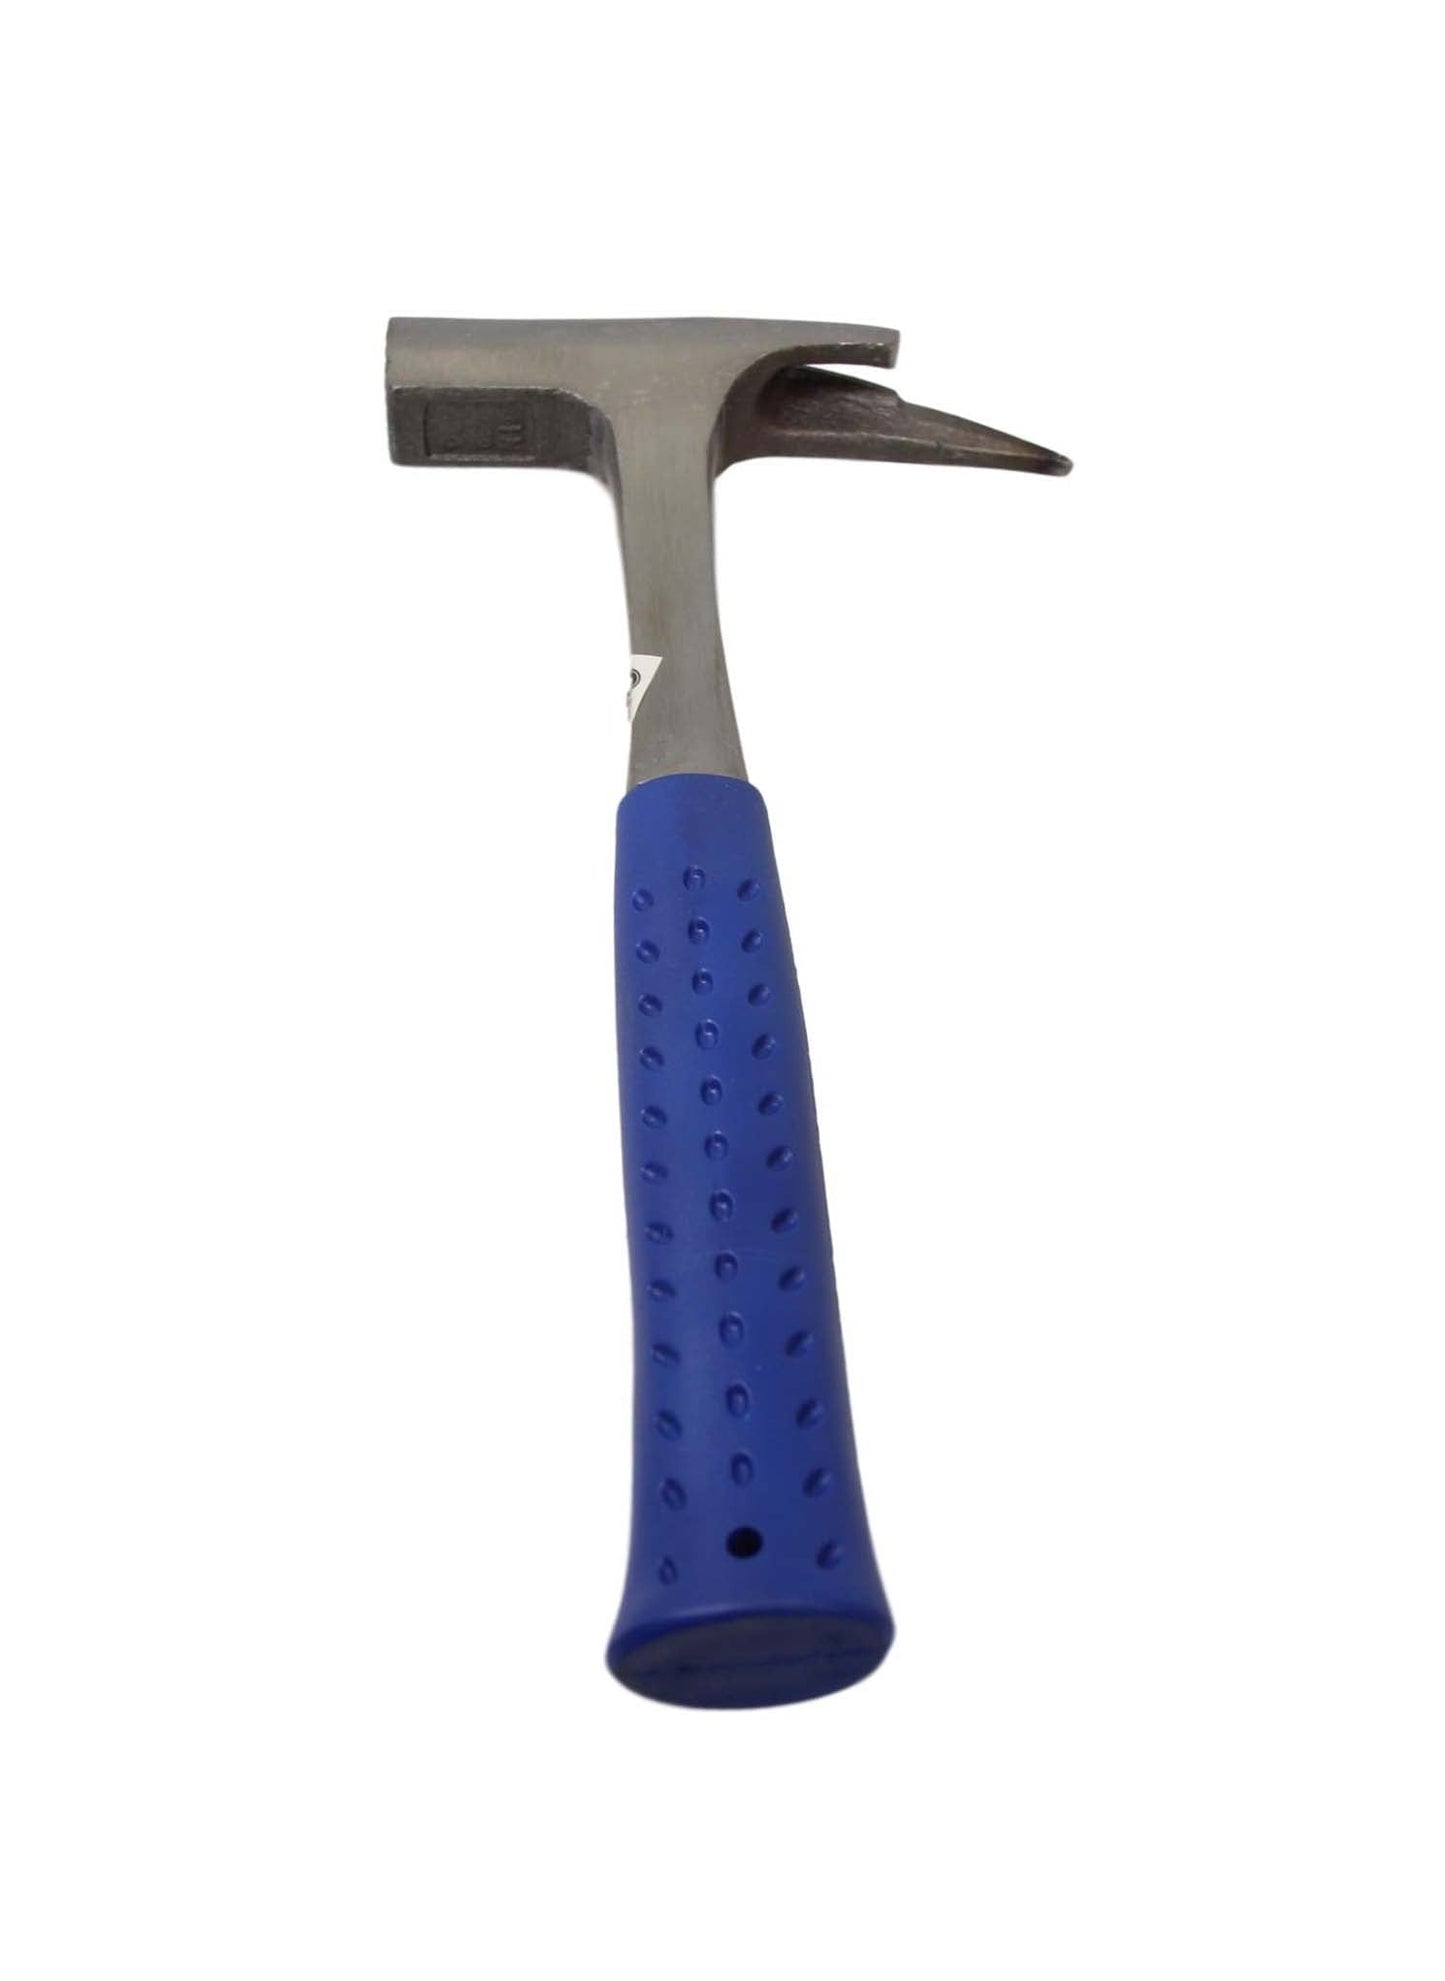 Builders Hammer 34 cm 6553 (Parcel Rate)